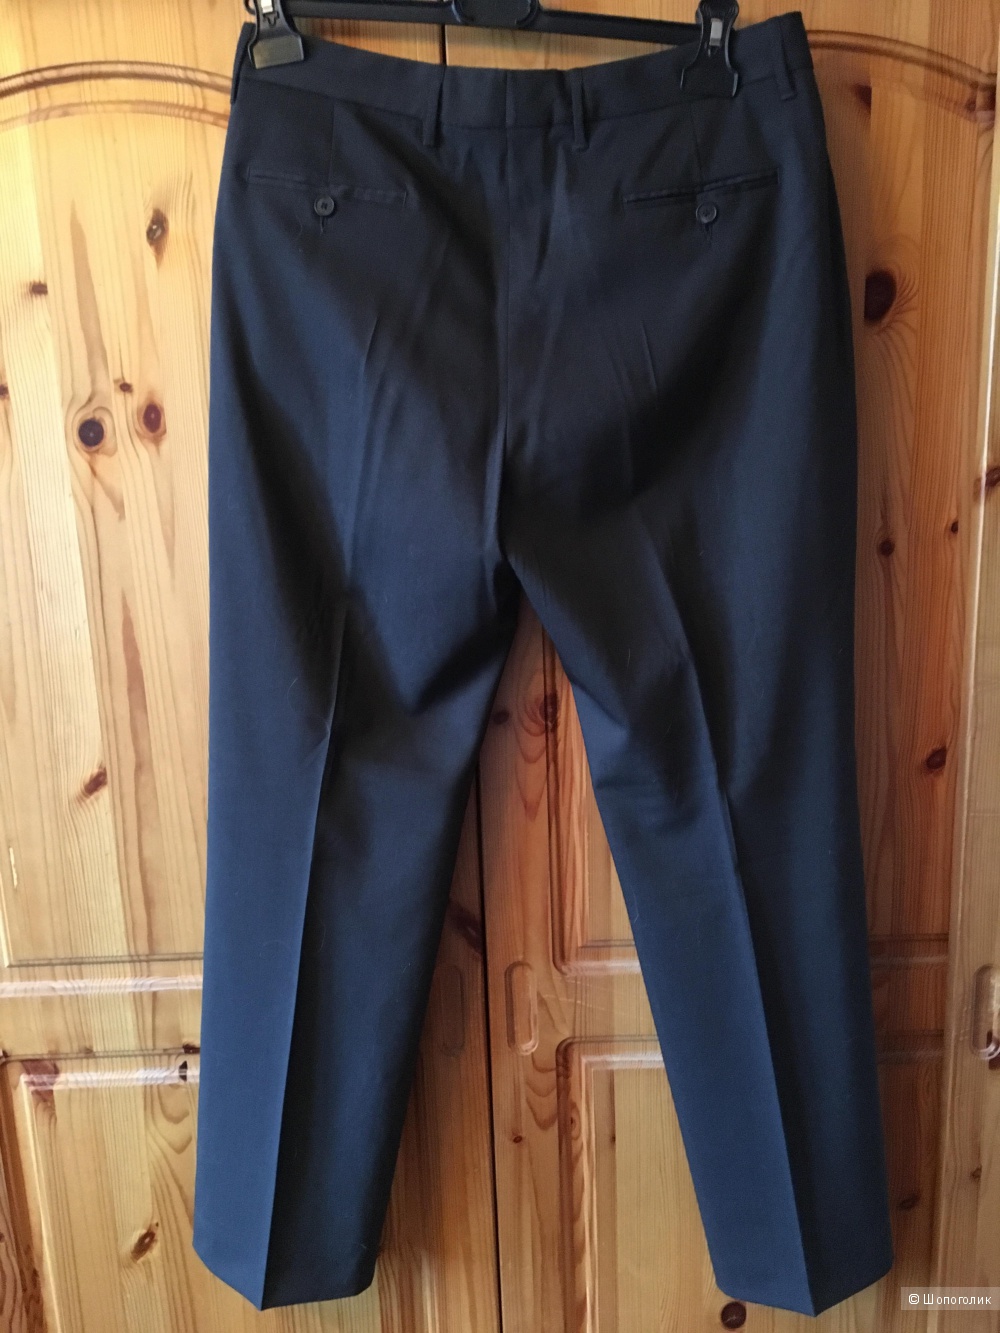 Шерстяные темно-серые брюки Calvin Klen Collection размер IT 44